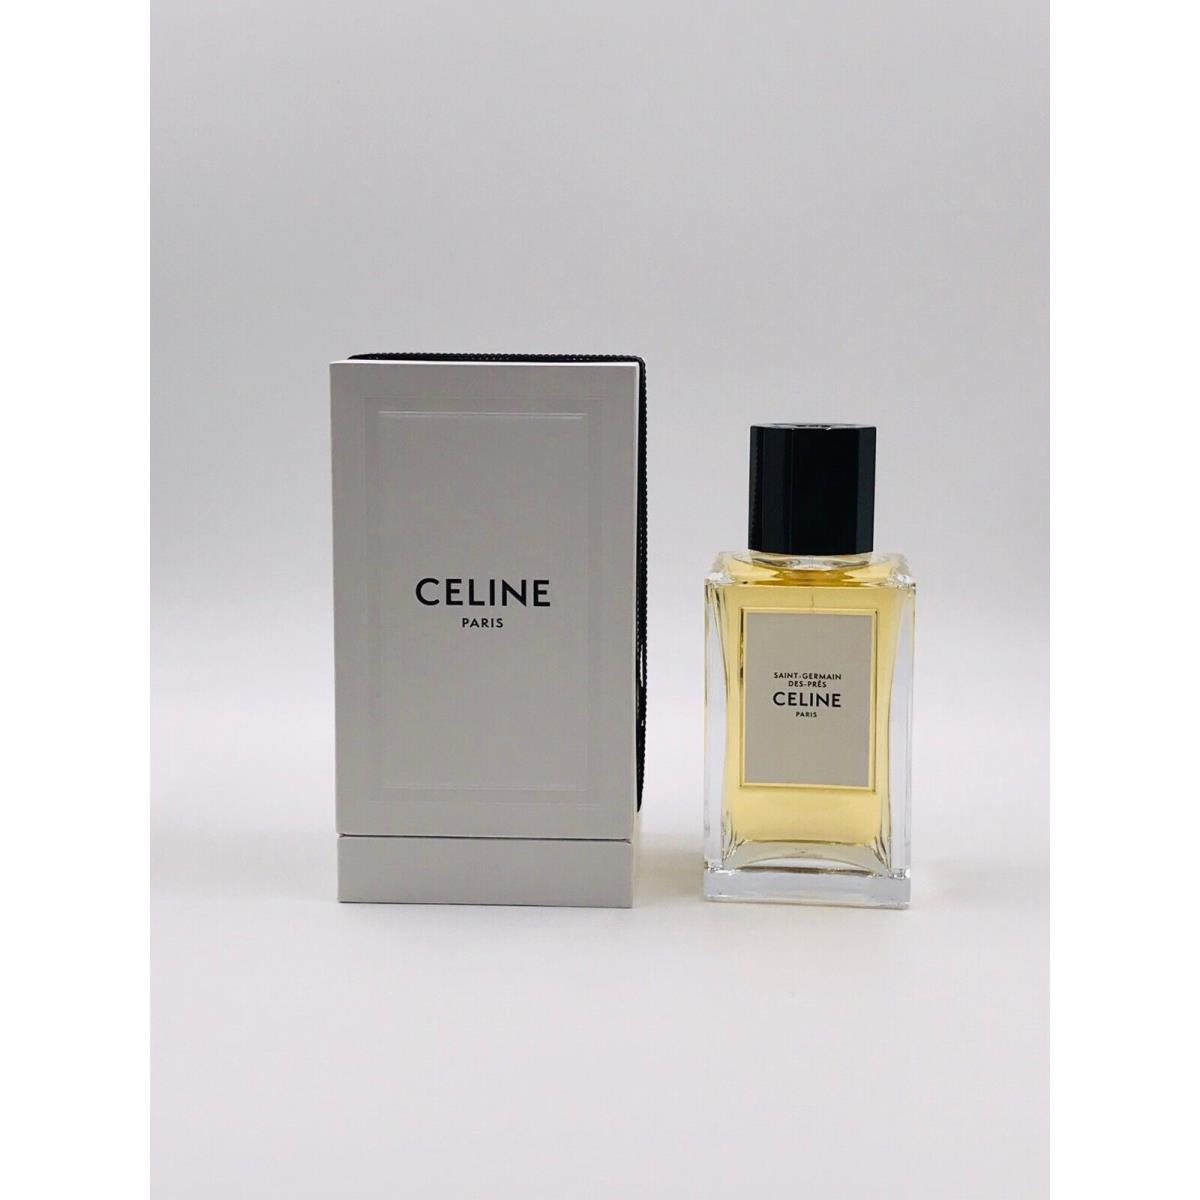 Celine Parfumerie Saint Germain Des Pres 6ml Parfum Niche Fragrance